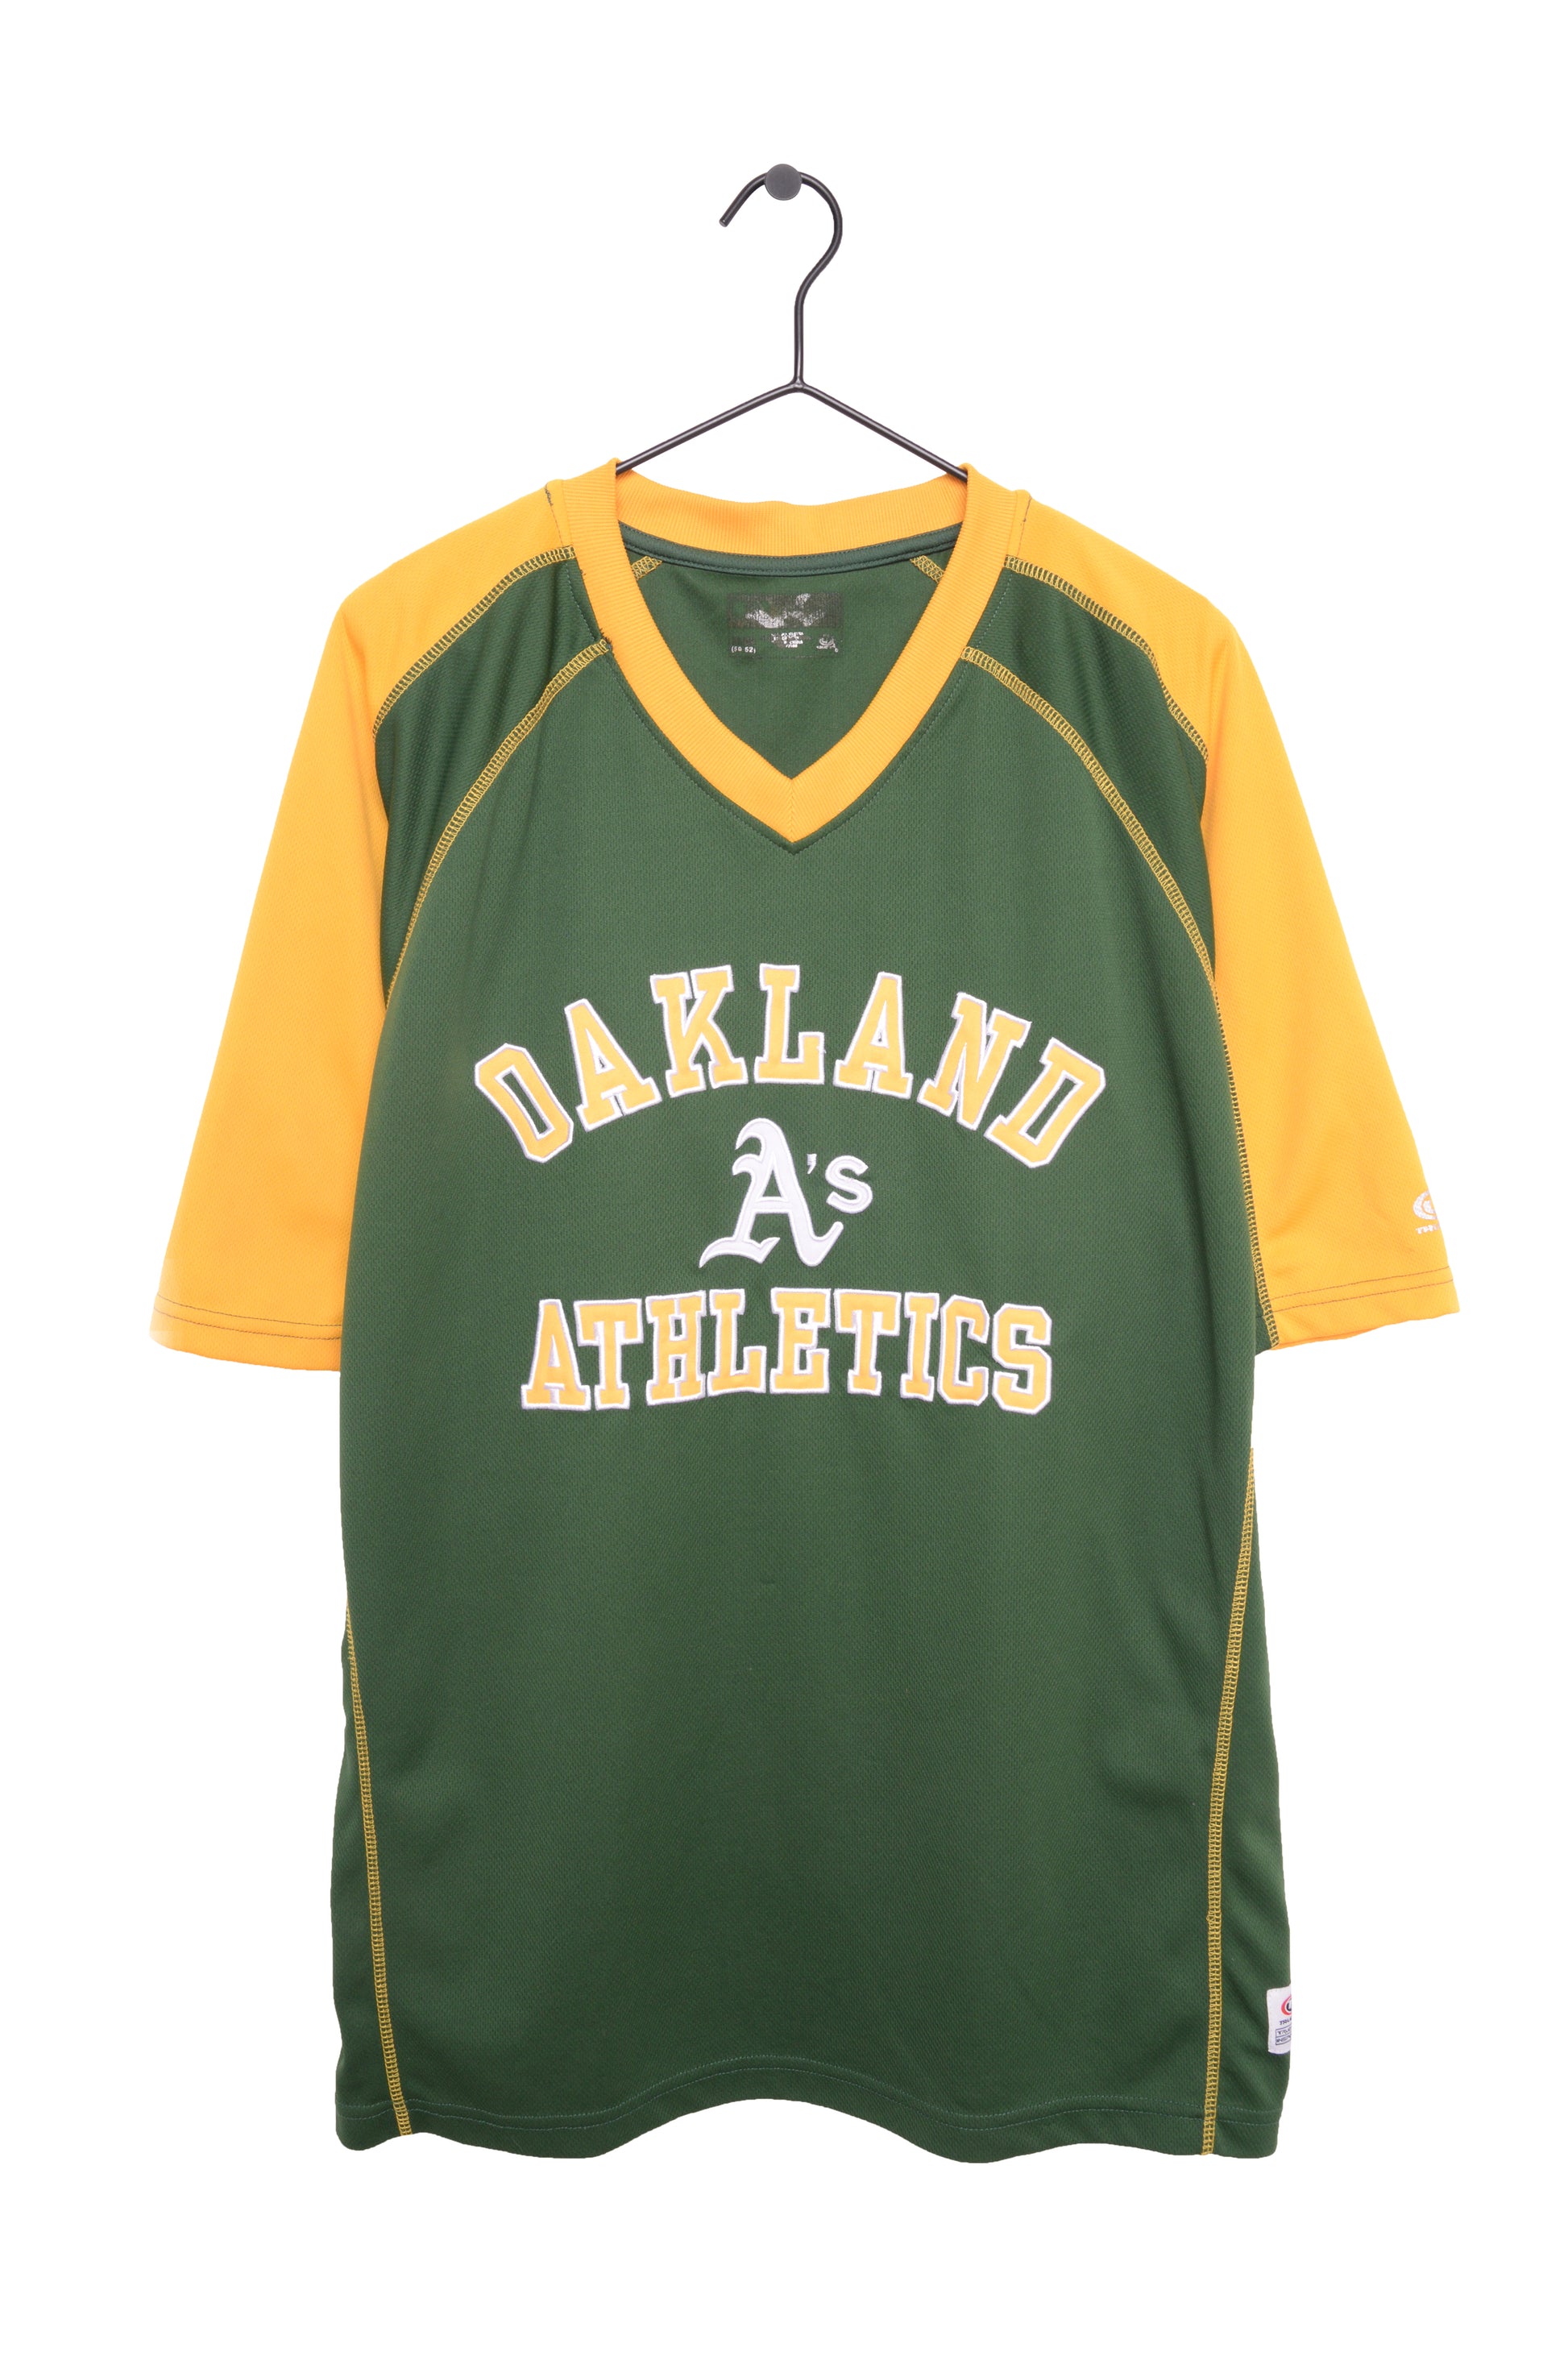 oakland a's baseball jersey